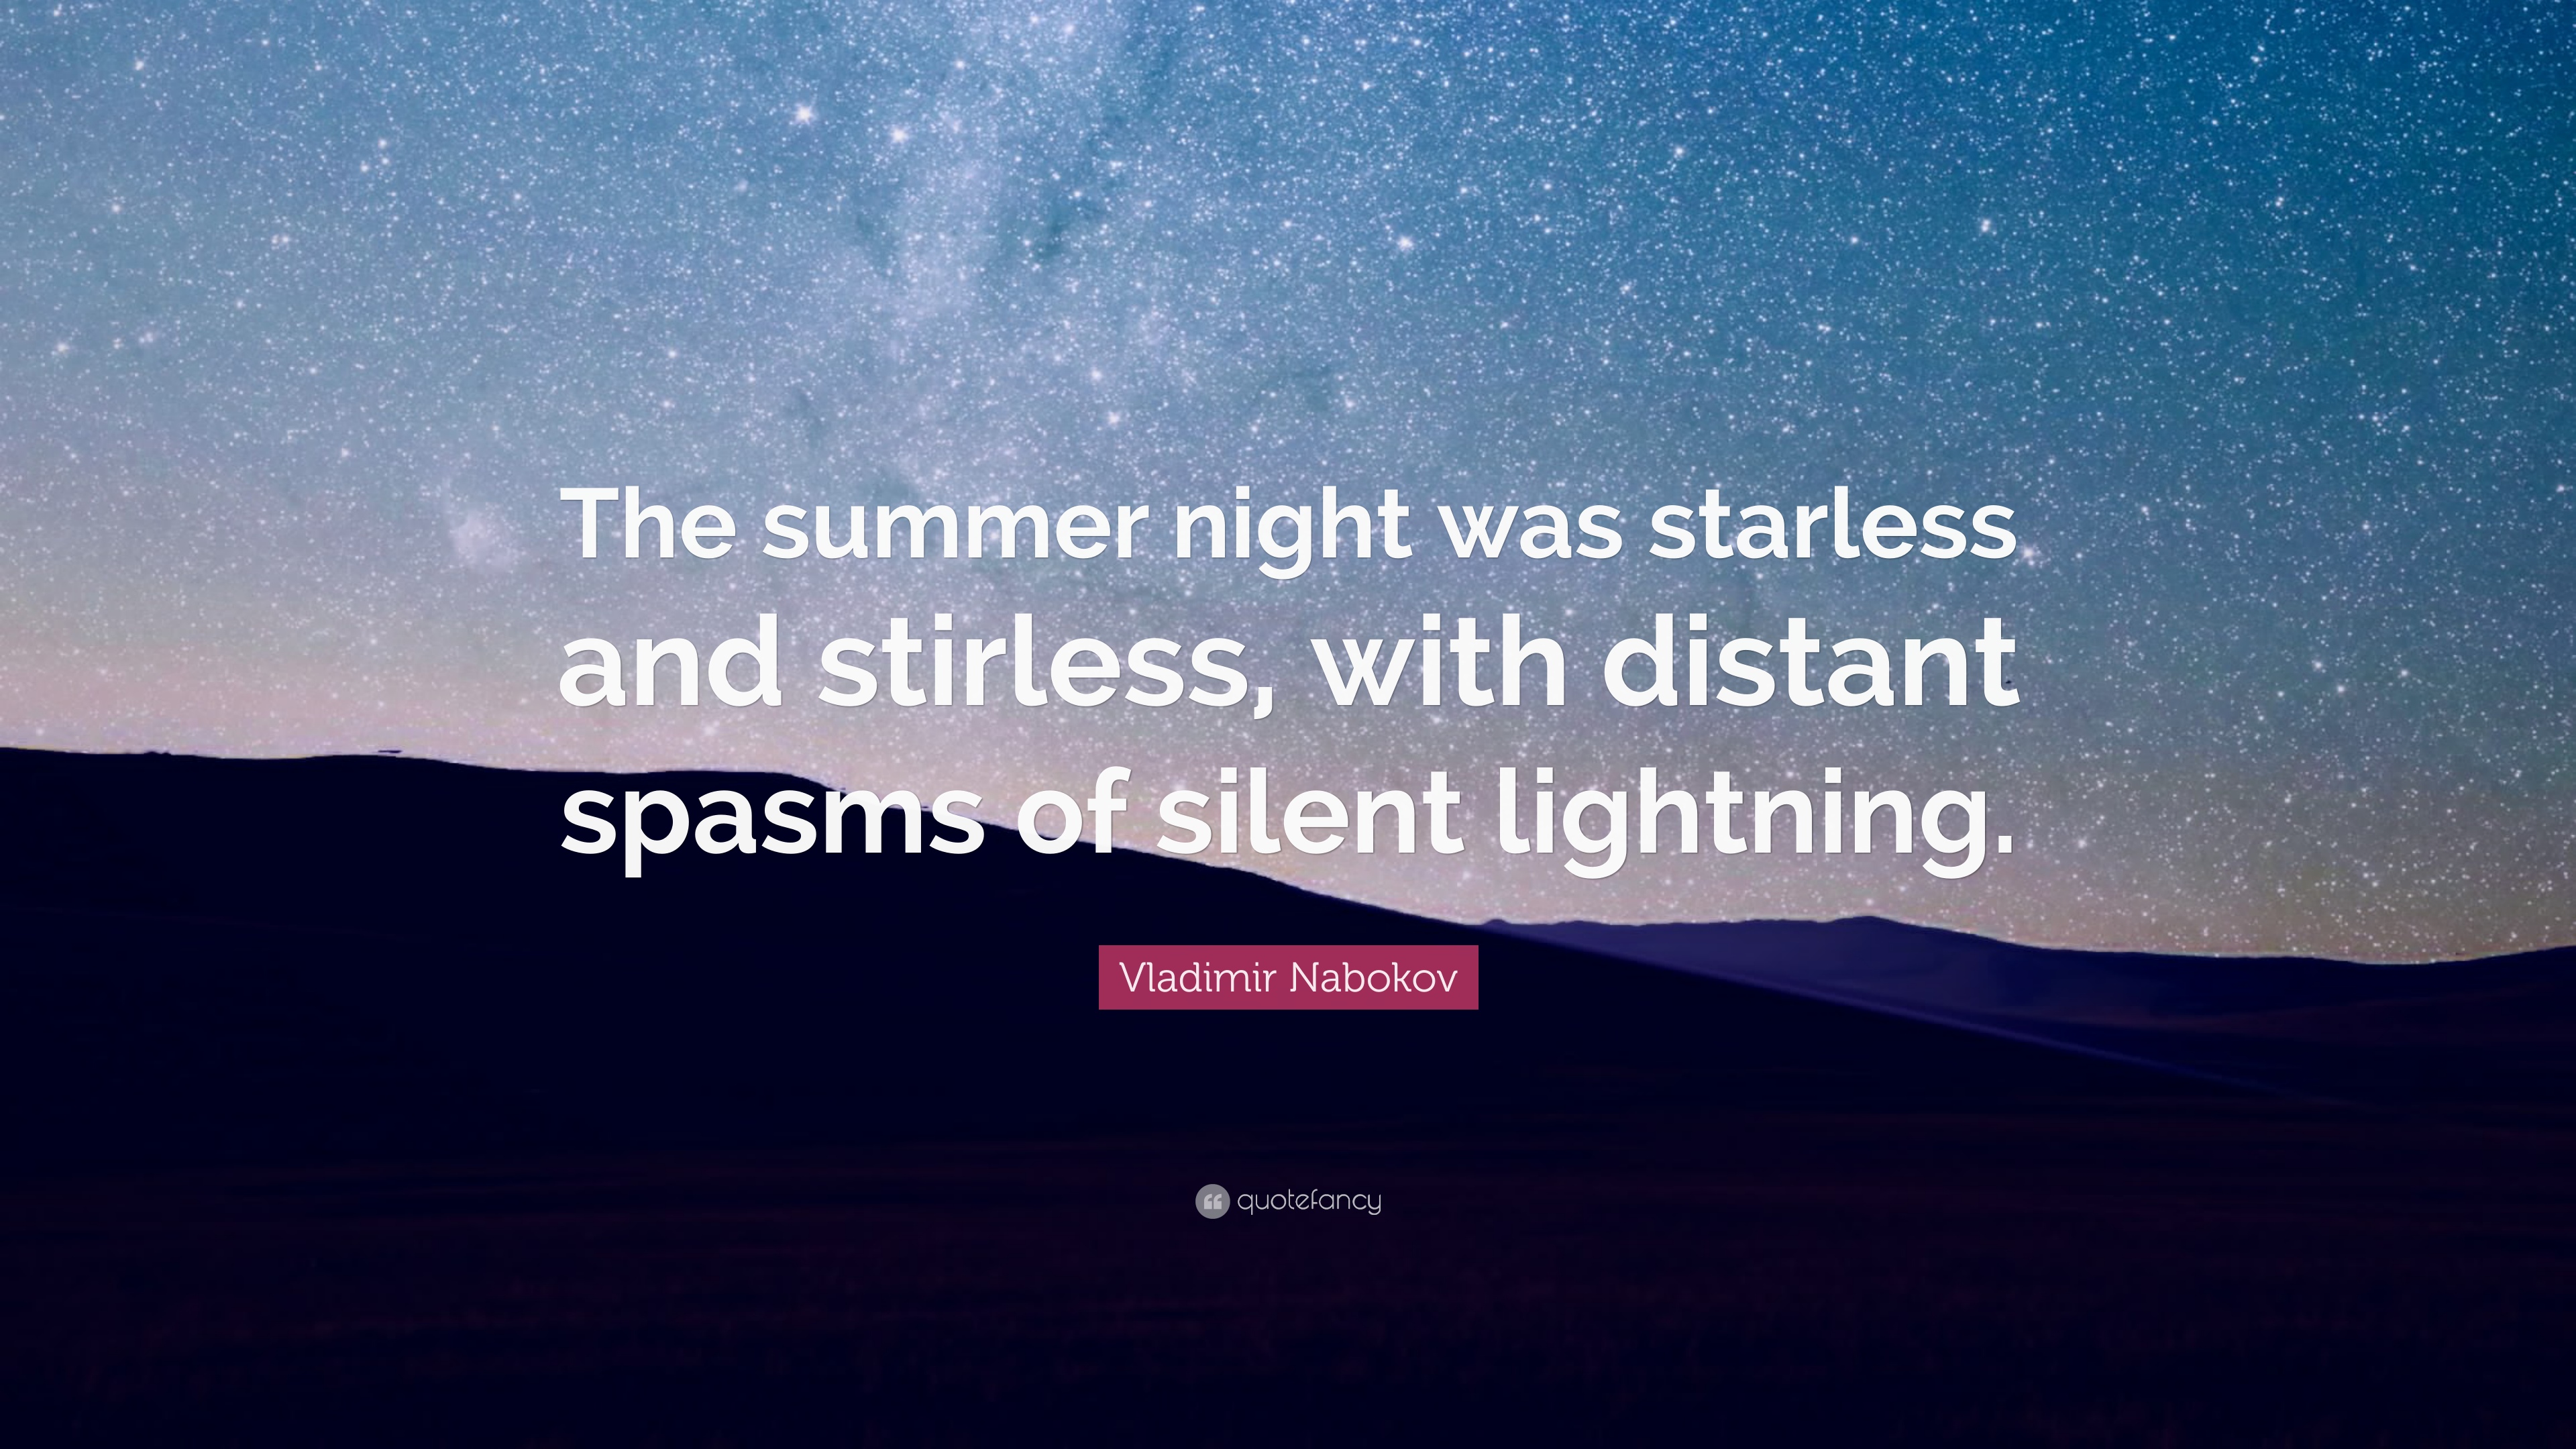 Vladimir Nabokov Quote: “The summer night was starless and stirless